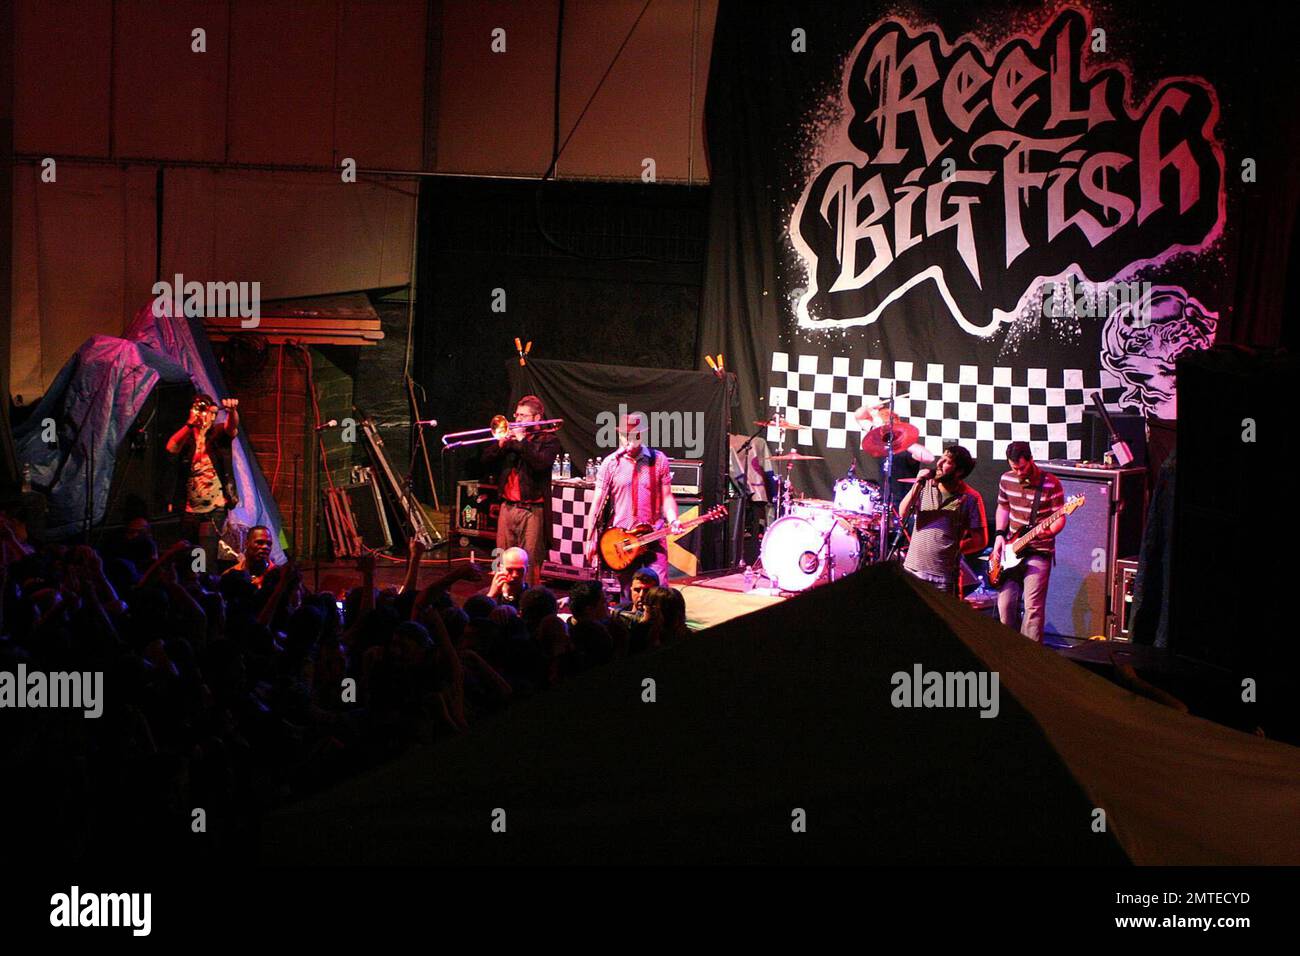 Reel Big Fish performs in concert at Club Revolution. Ft